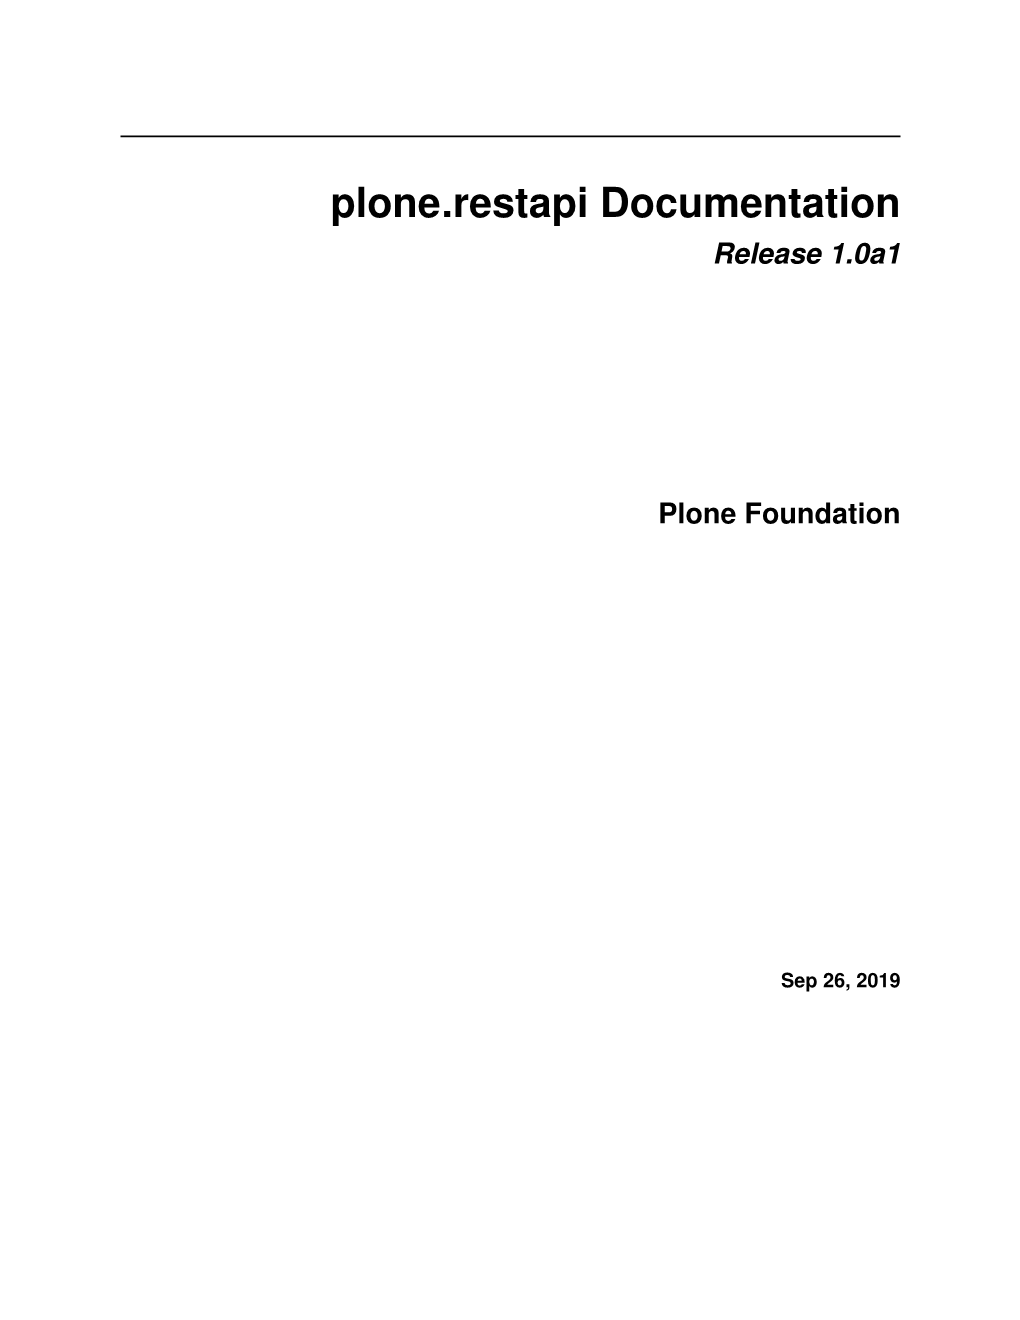 Plone.Restapi Documentation Release 1.0A1